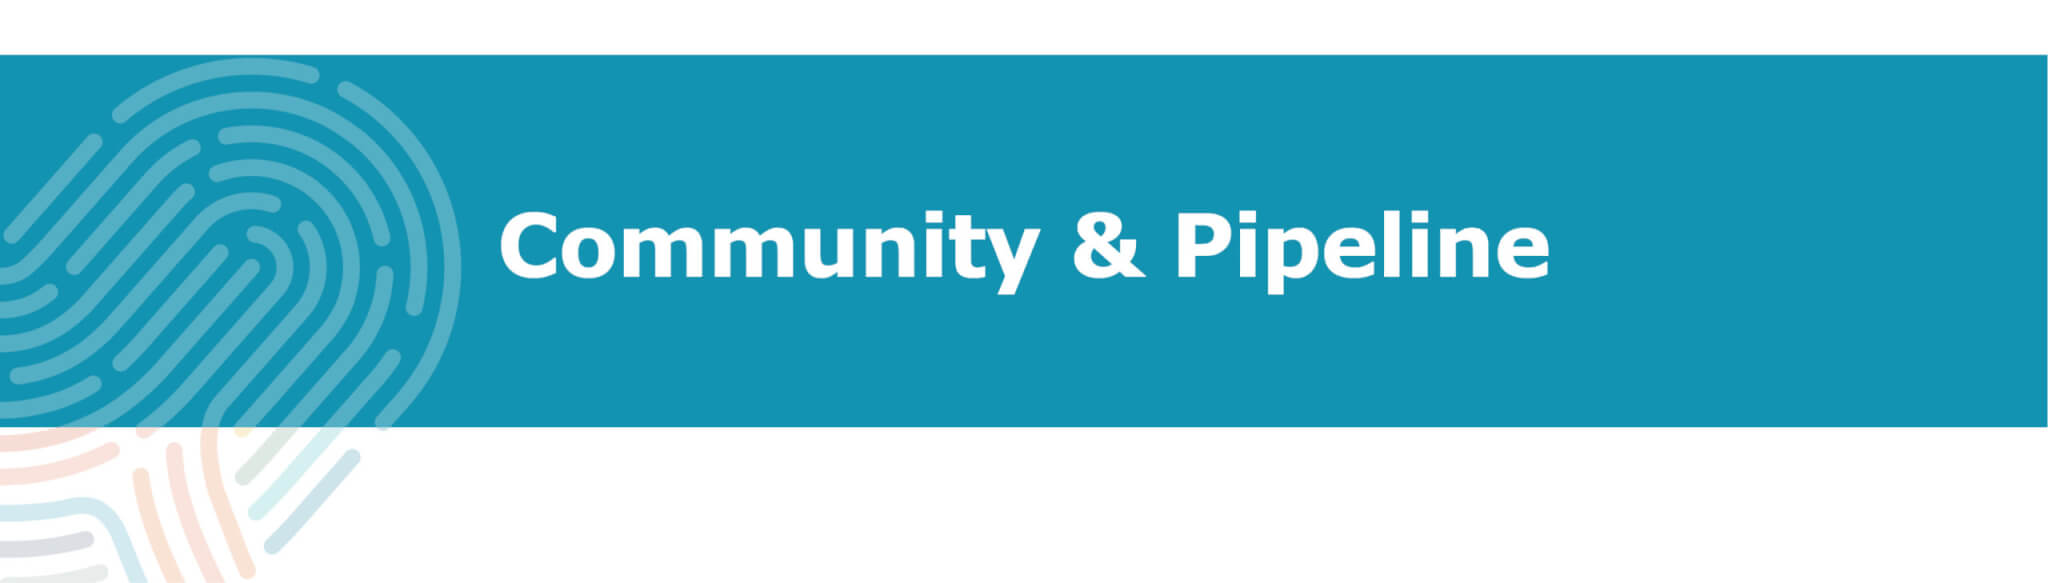 Community & Pipeline Header Graphic